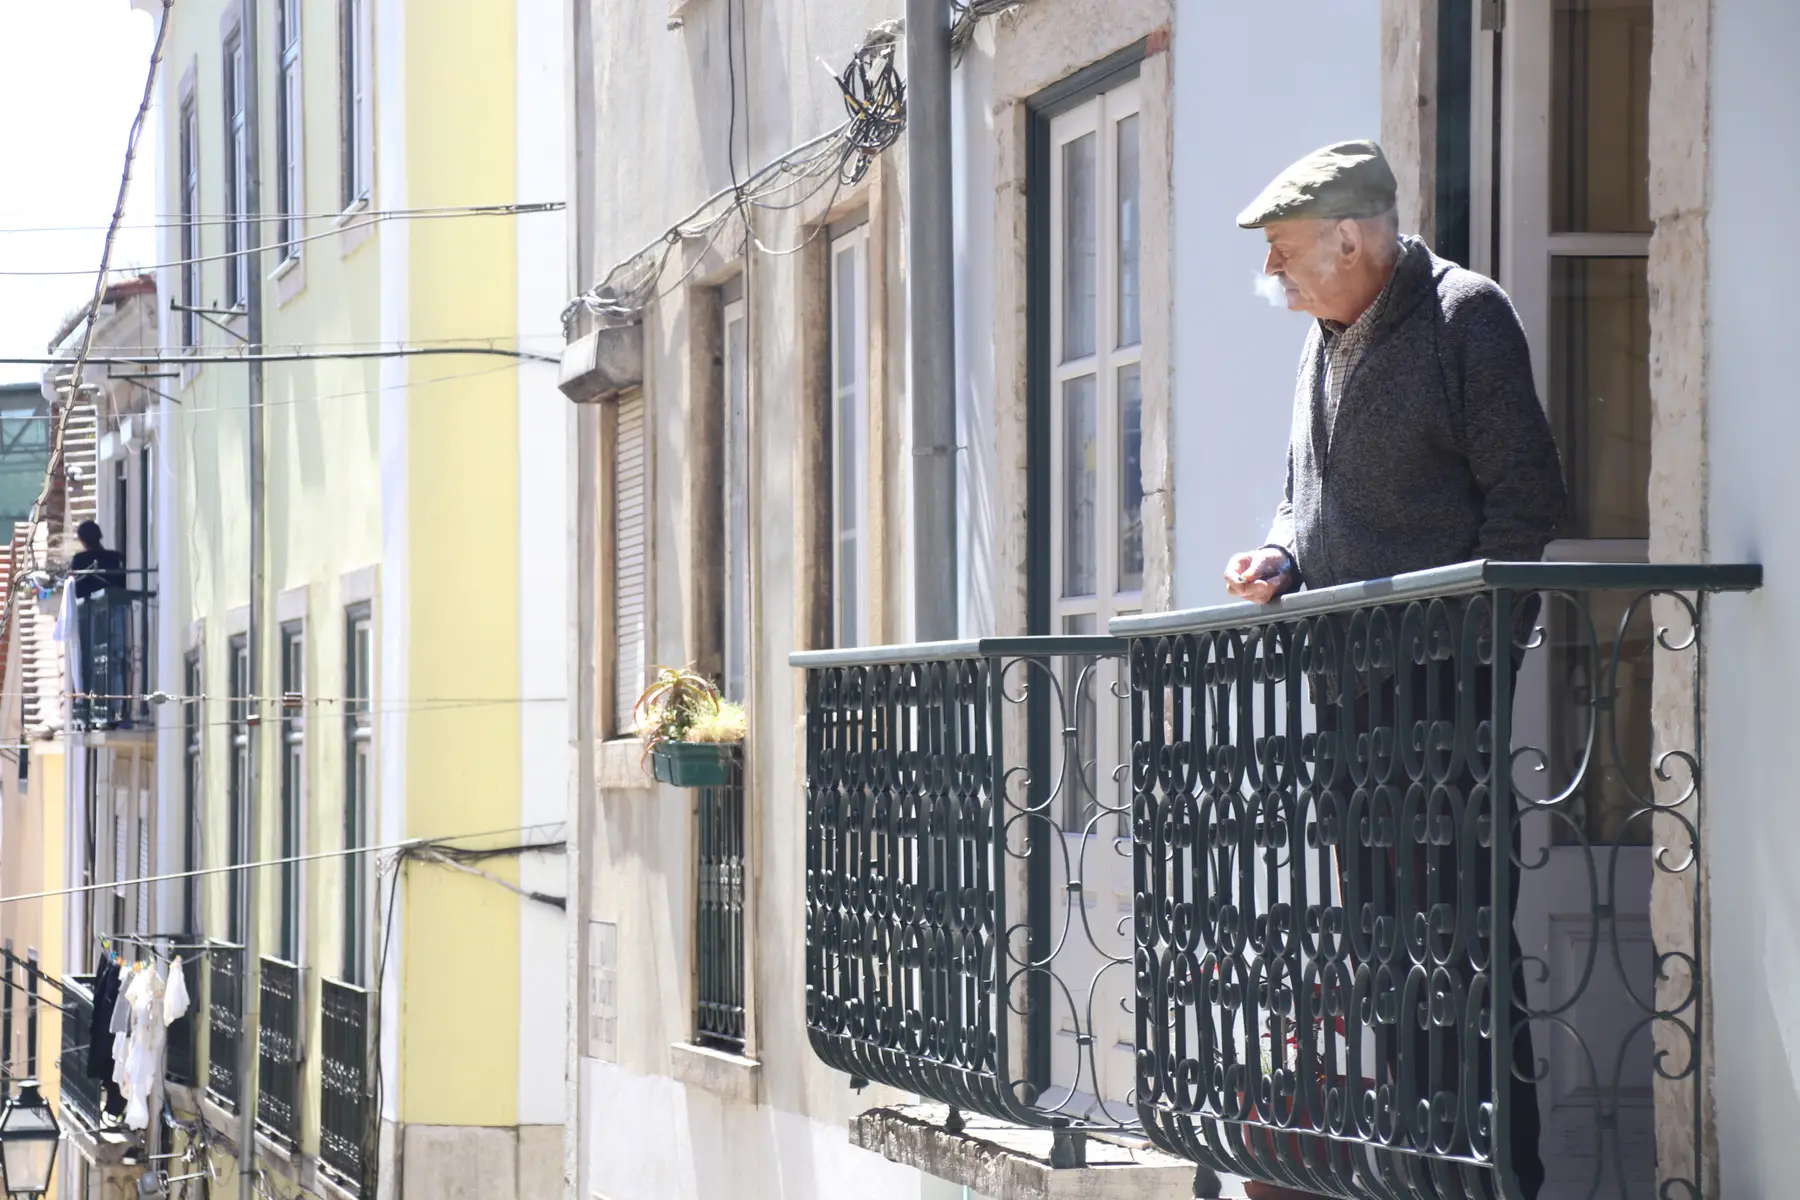 Elderly man in Portugal